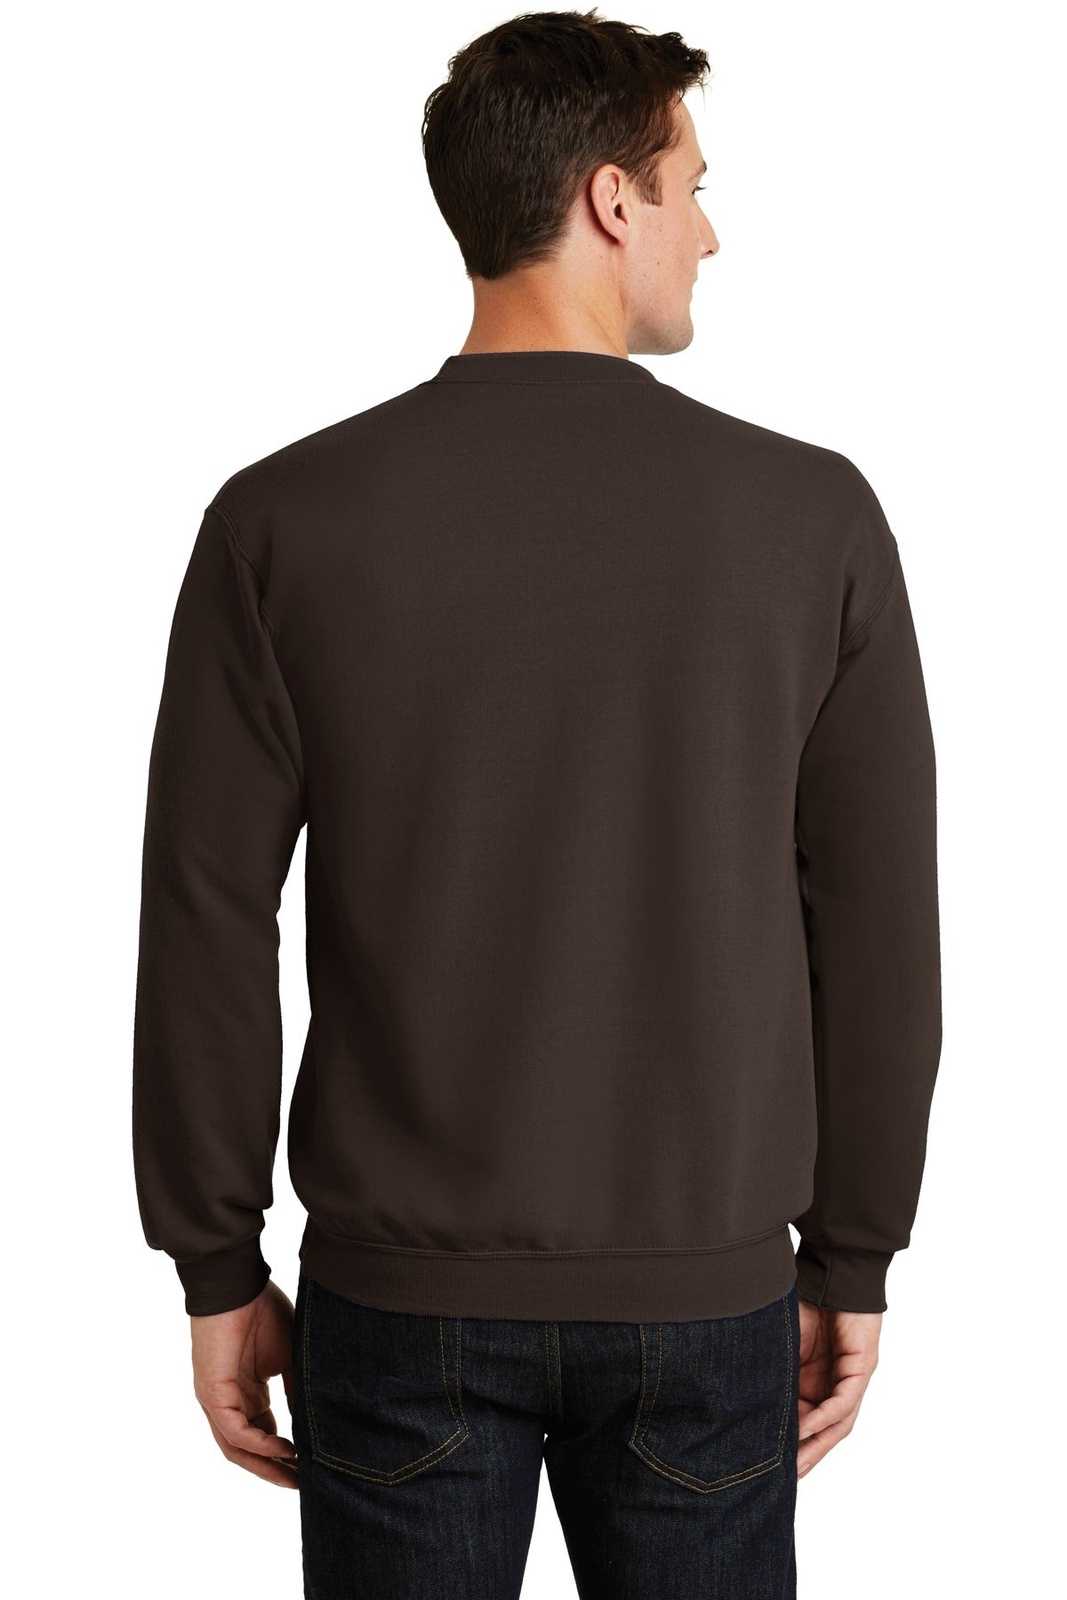 Port &amp; Company PC78 Core Fleece Crewneck Sweatshirt - Dark Chocolate Brown - HIT a Double - 2